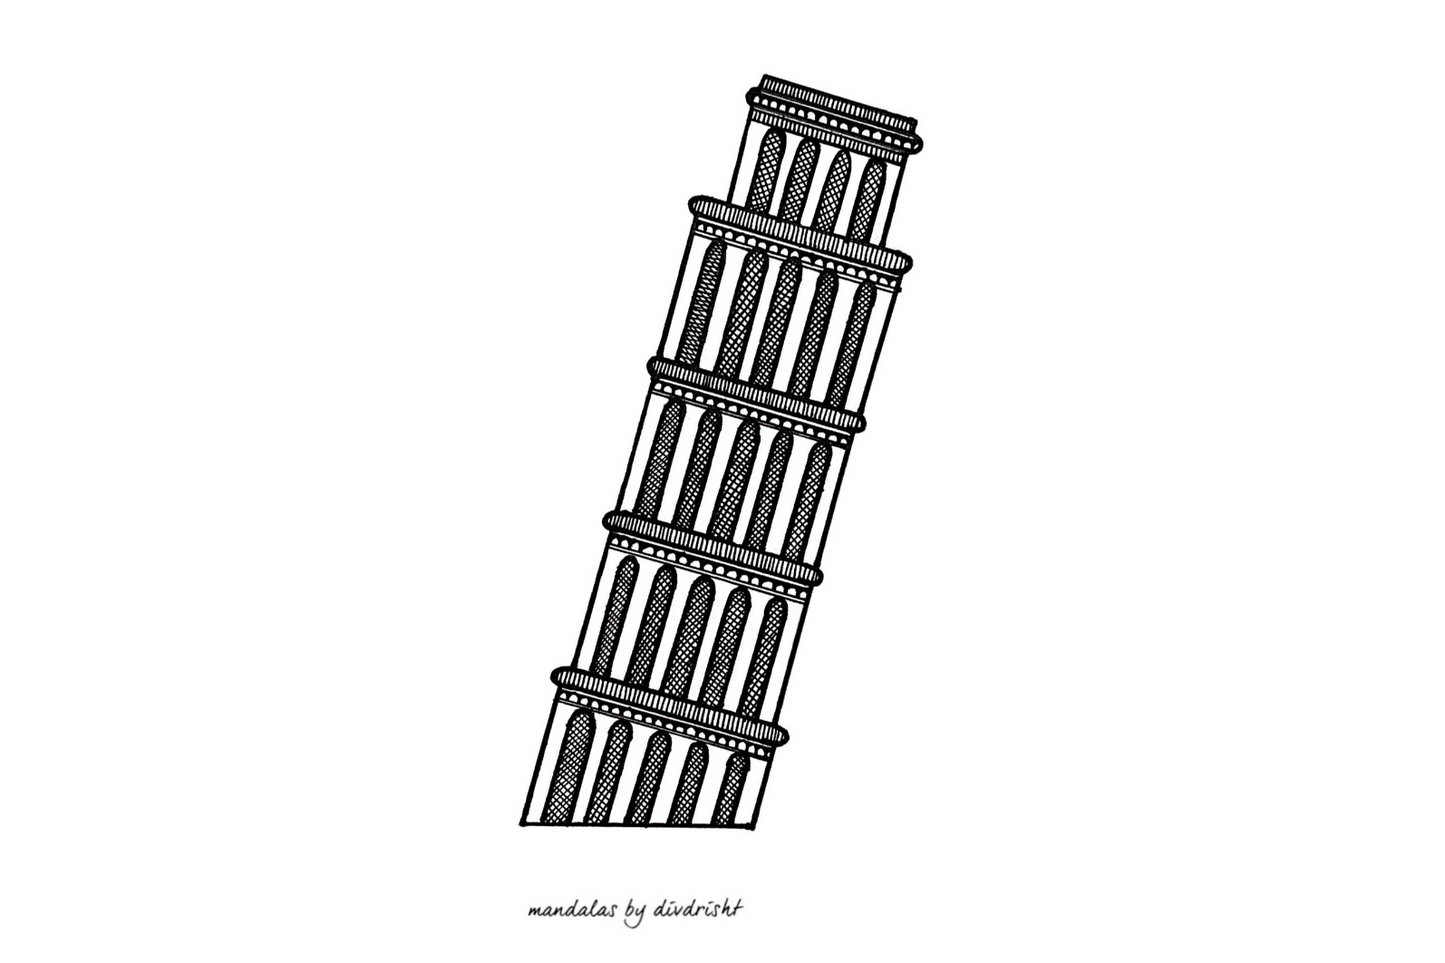 Mandalas by Divrisht 'Leaning Tower of Pisa' Postcard